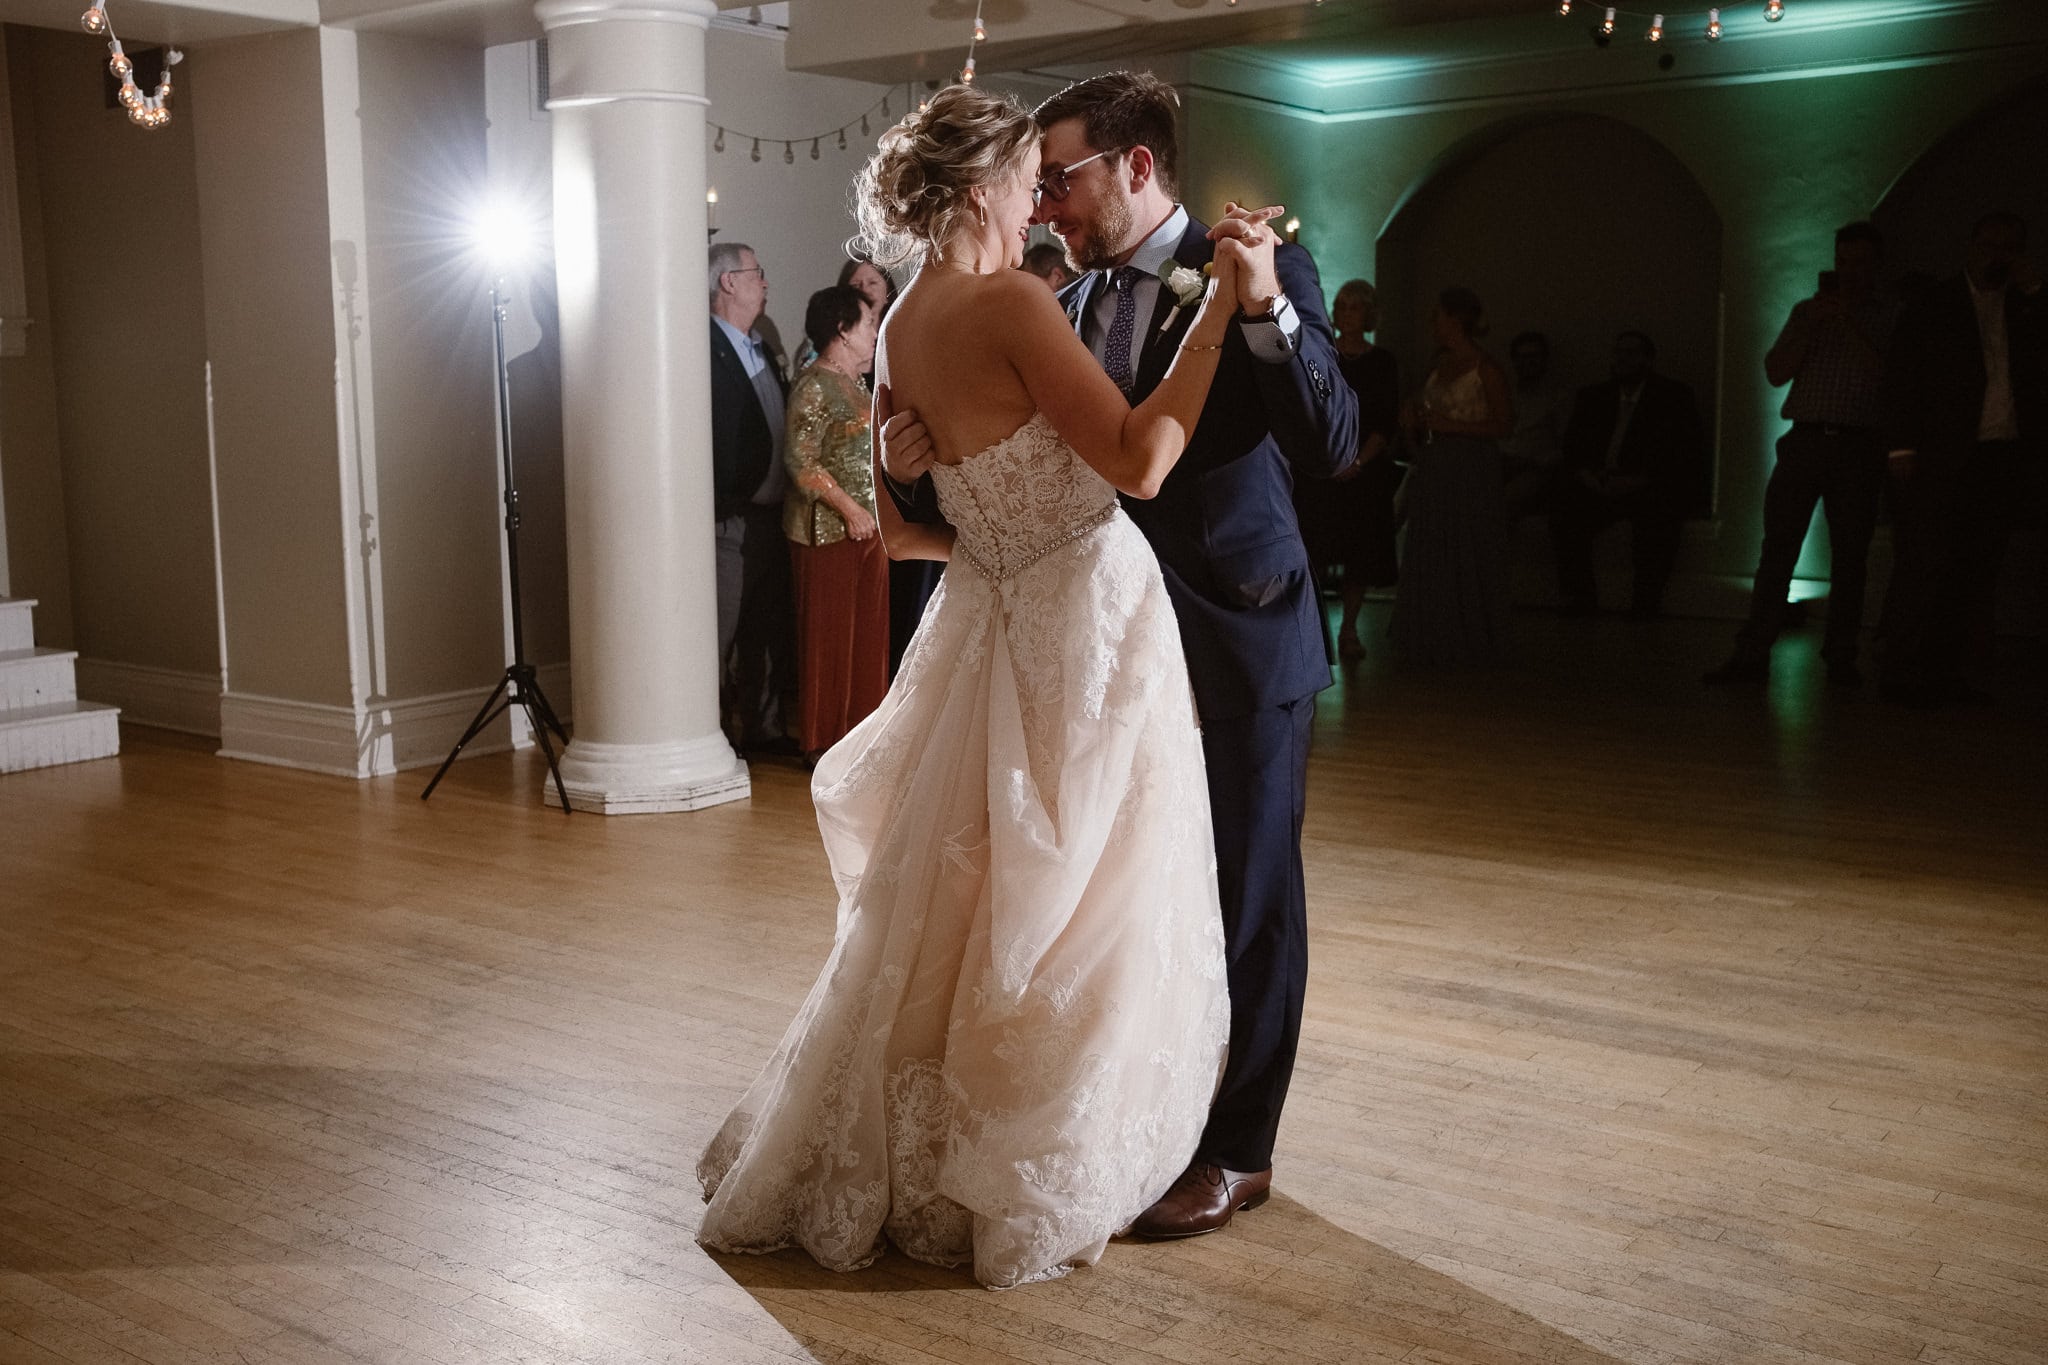 Grant Humphreys Mansion Wedding Photographer, Denver wedding photographer, Colorado wedding photographer, bride and groom first dance